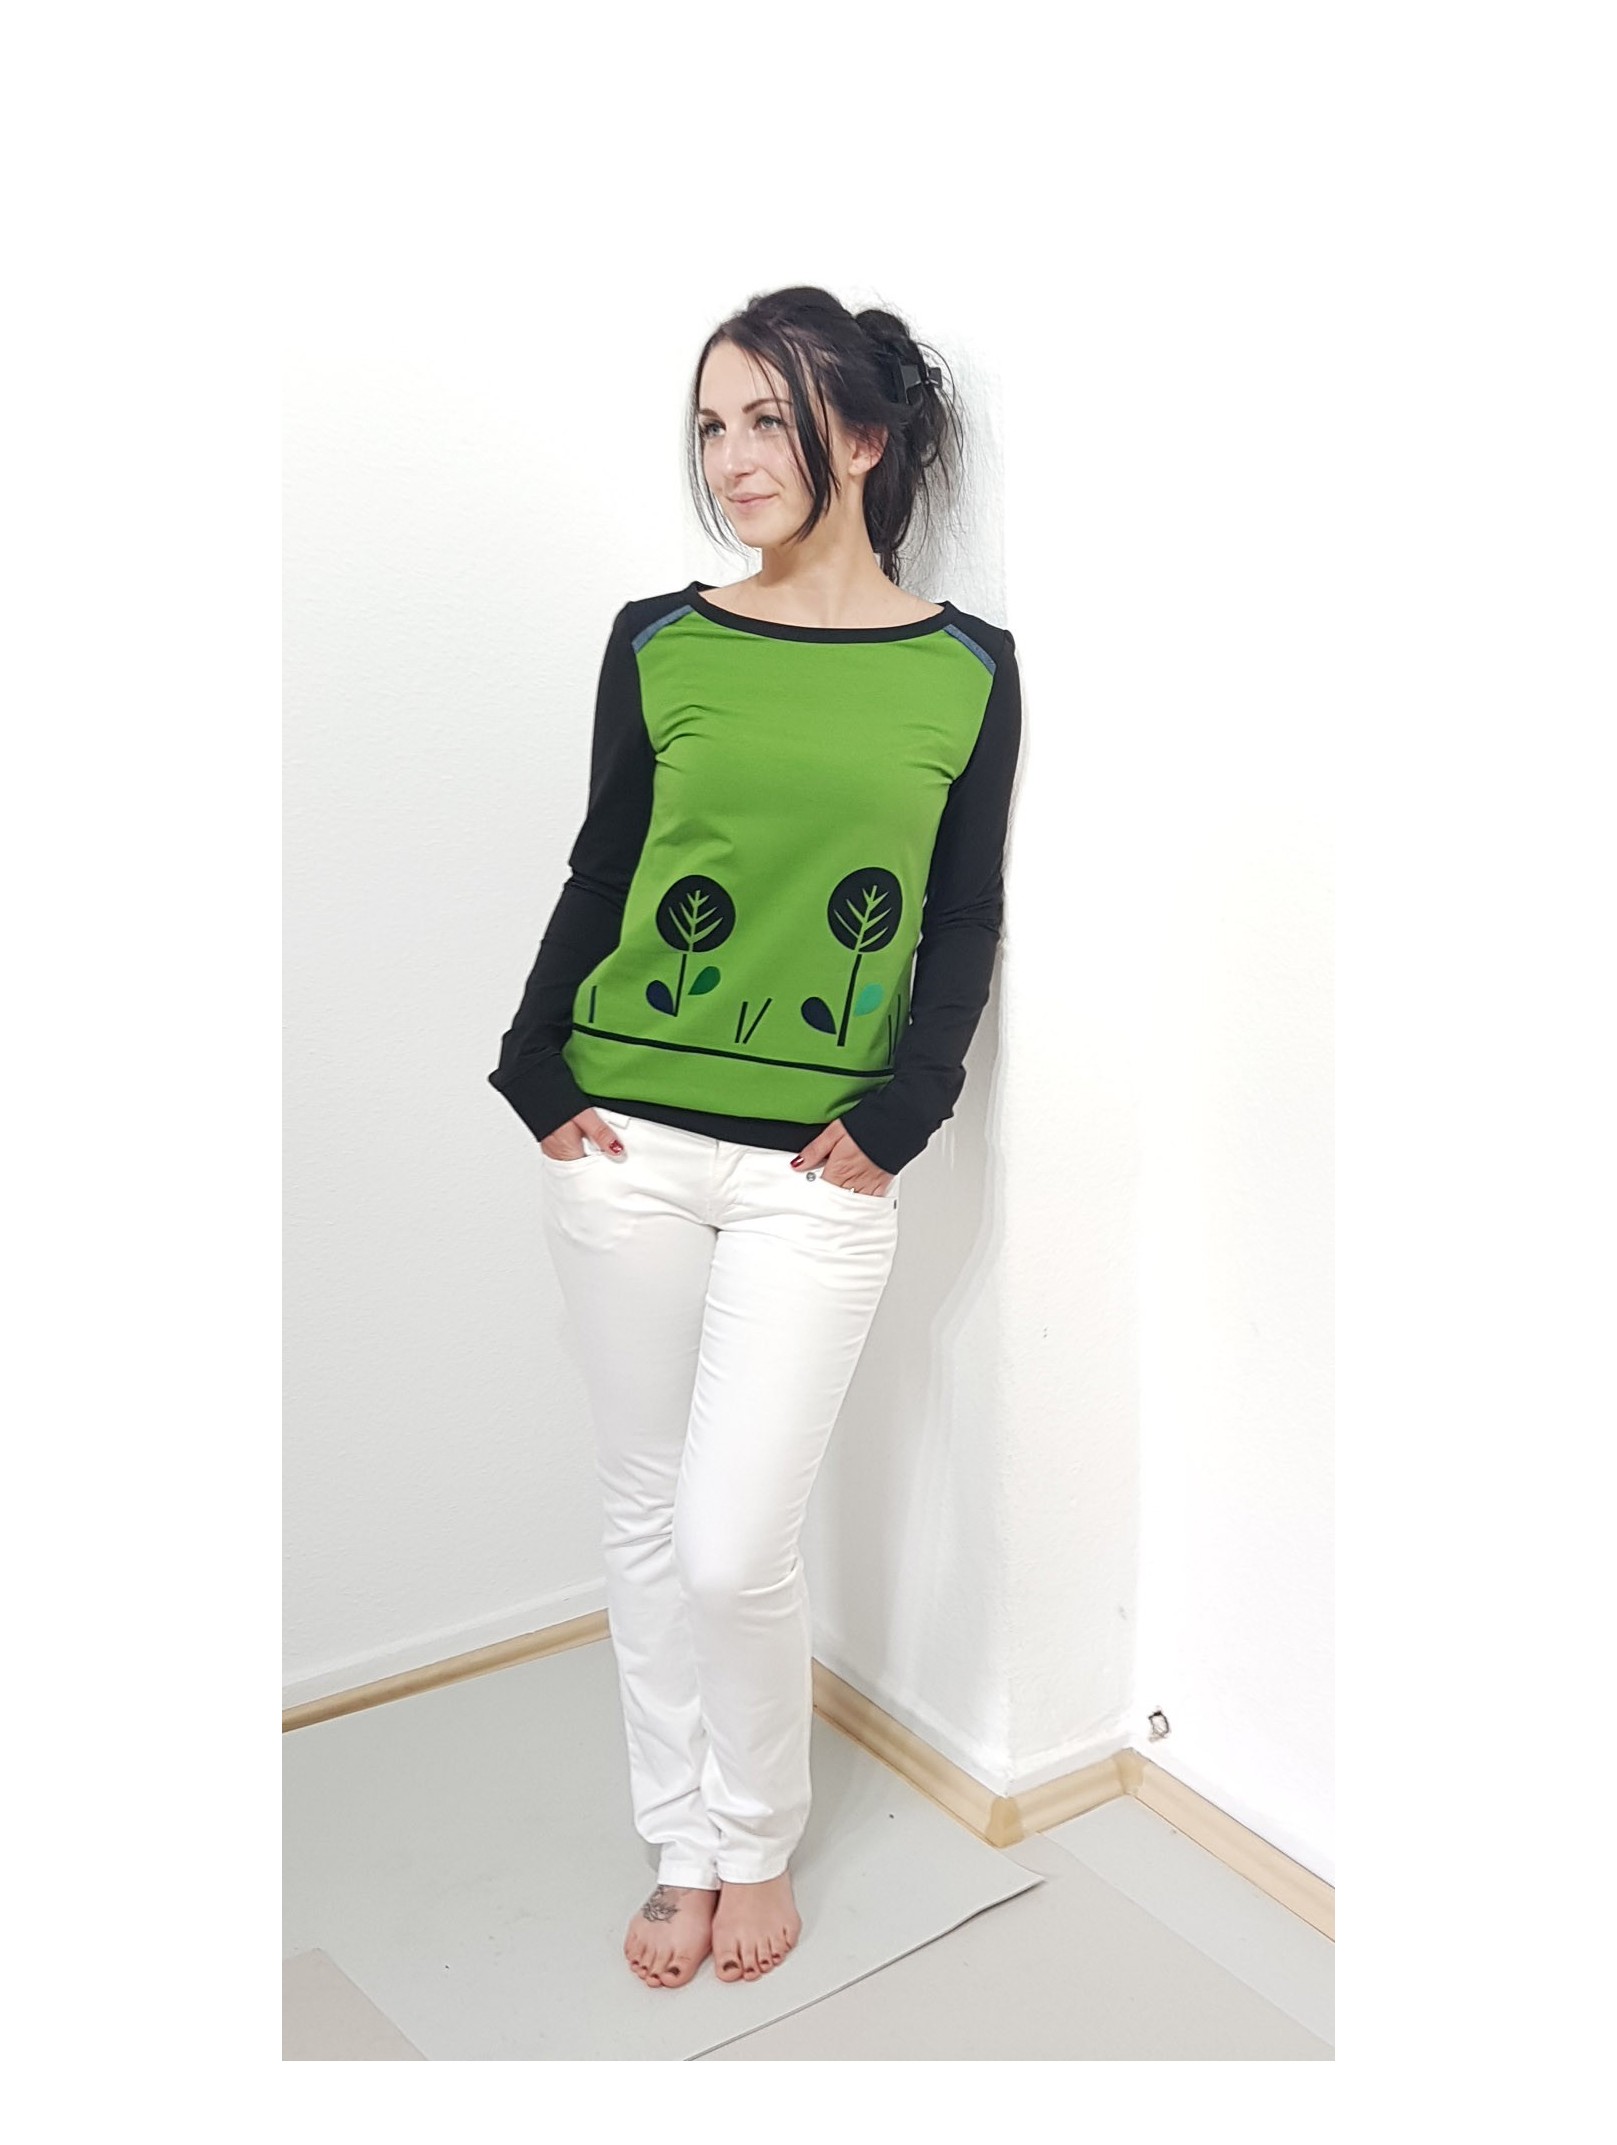 Iza Fabian, Damen Langarm Shirt mit Retro Blumen,grün, schwarz, pullover,